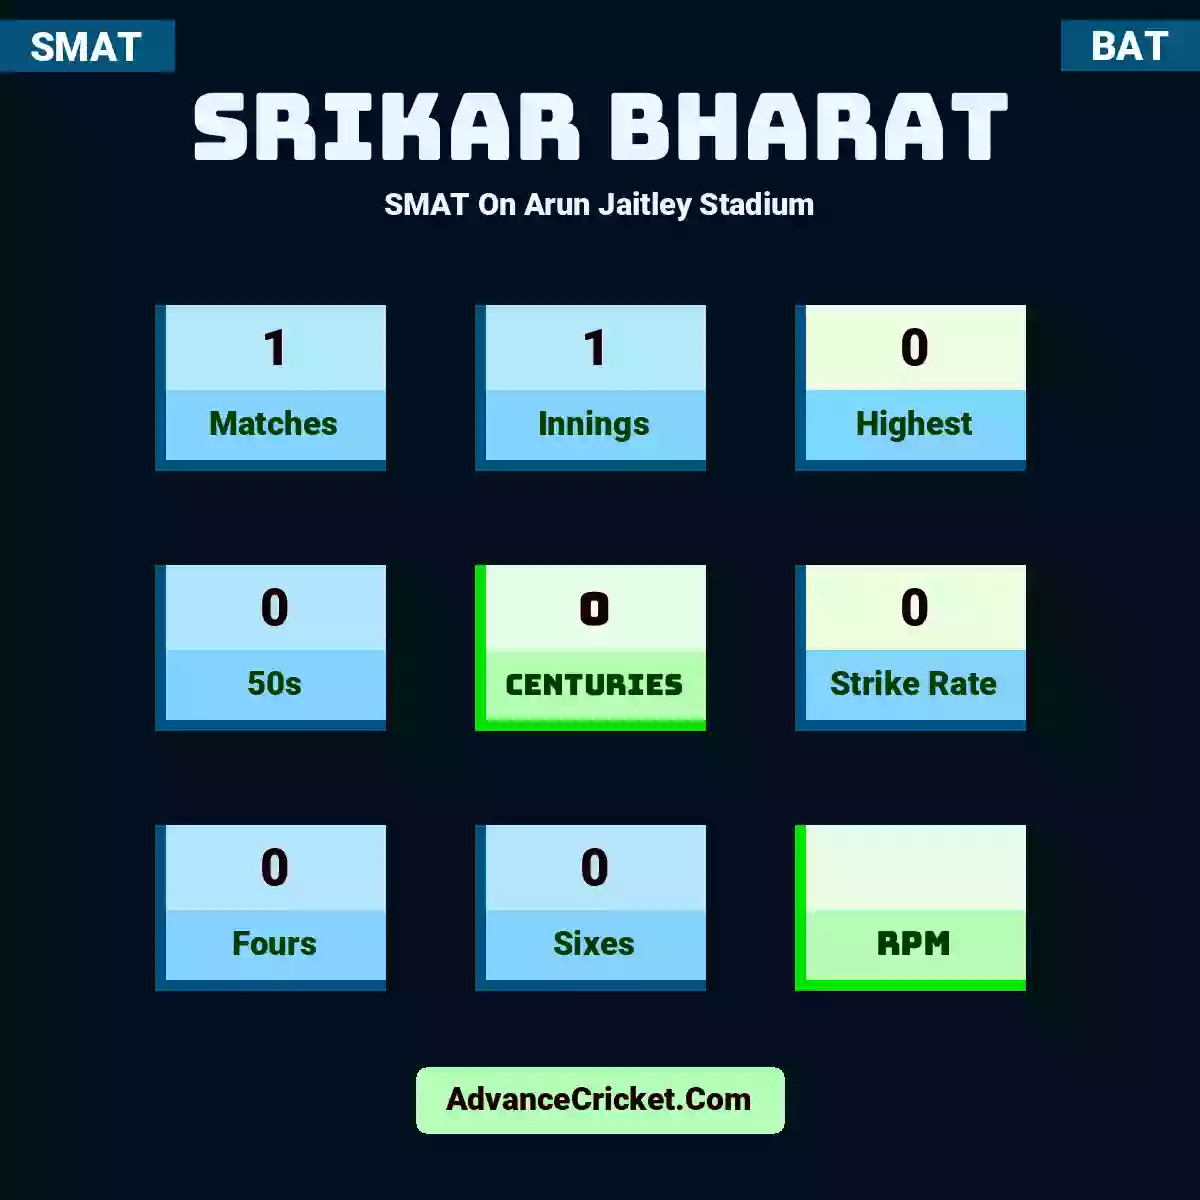 Srikar Bharat SMAT  On Arun Jaitley Stadium, Srikar Bharat played 1 matches, scored 0 runs as highest, 0 half-centuries, and 0 centuries, with a strike rate of 0. S.Bharat hit 0 fours and 0 sixes.